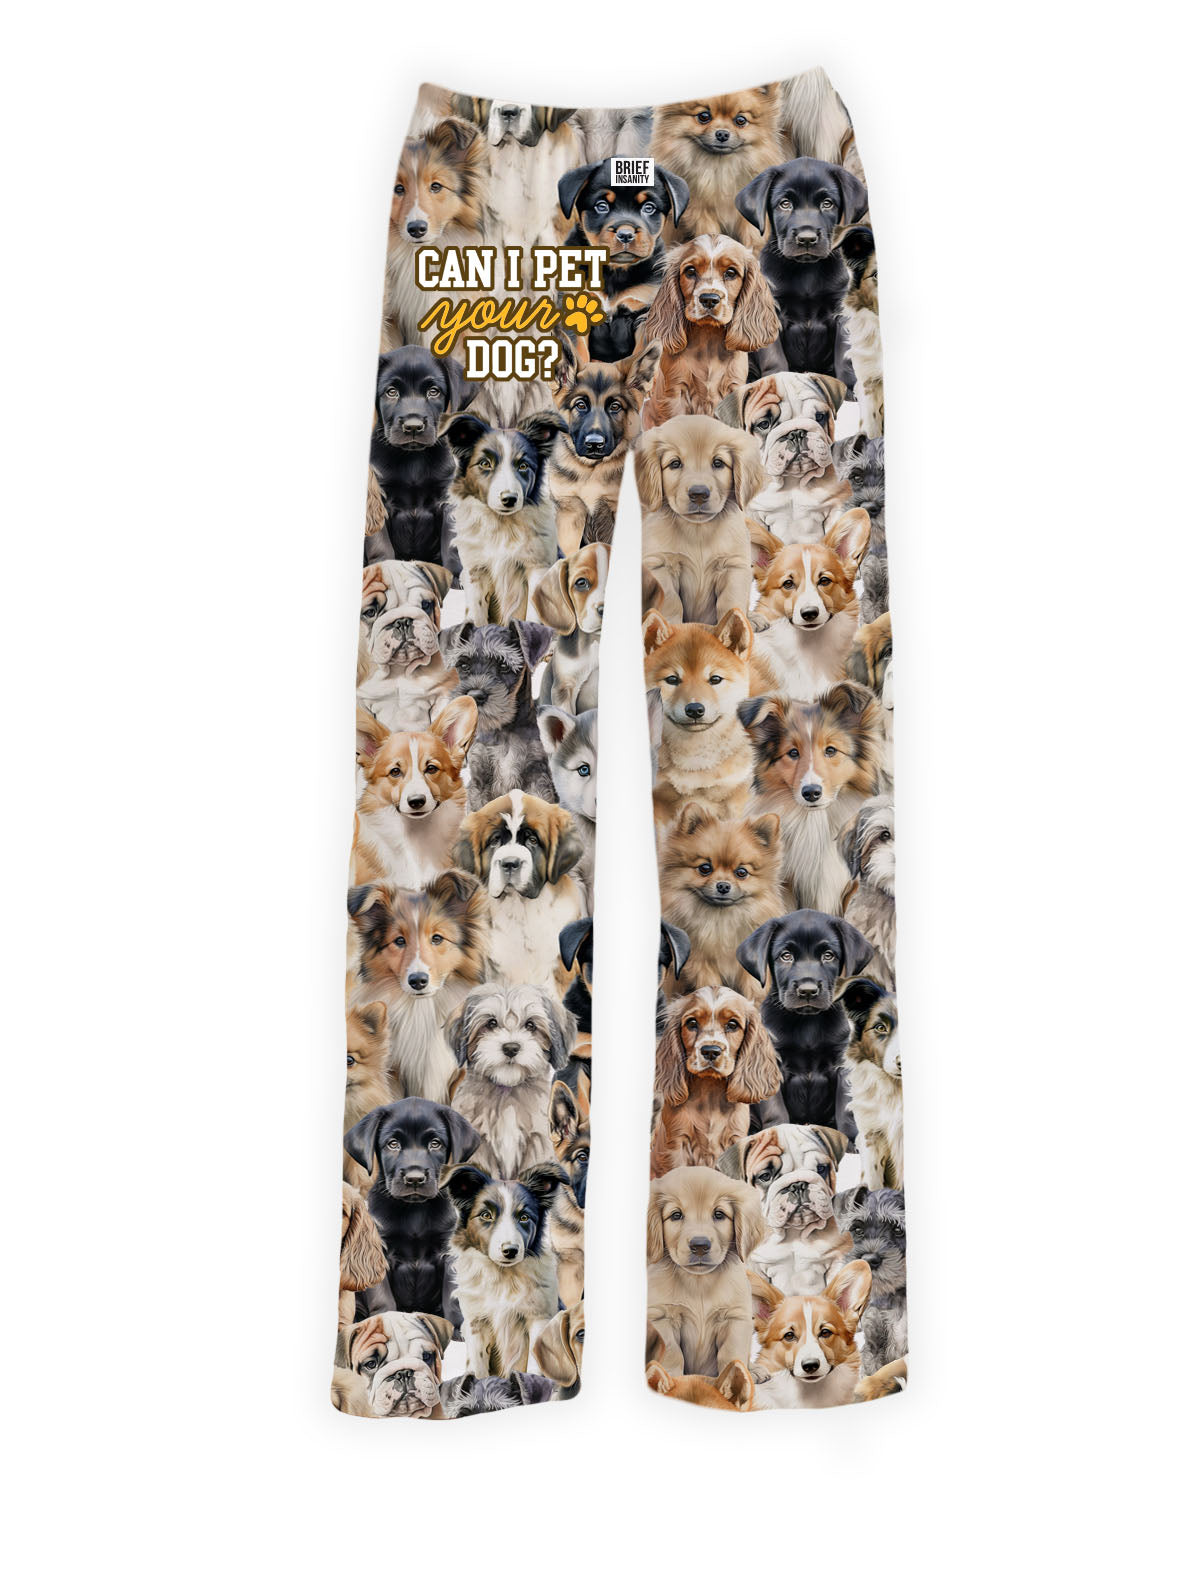 BRIEF INSANITY's Pet Your Dog Pajama Lounge Pants